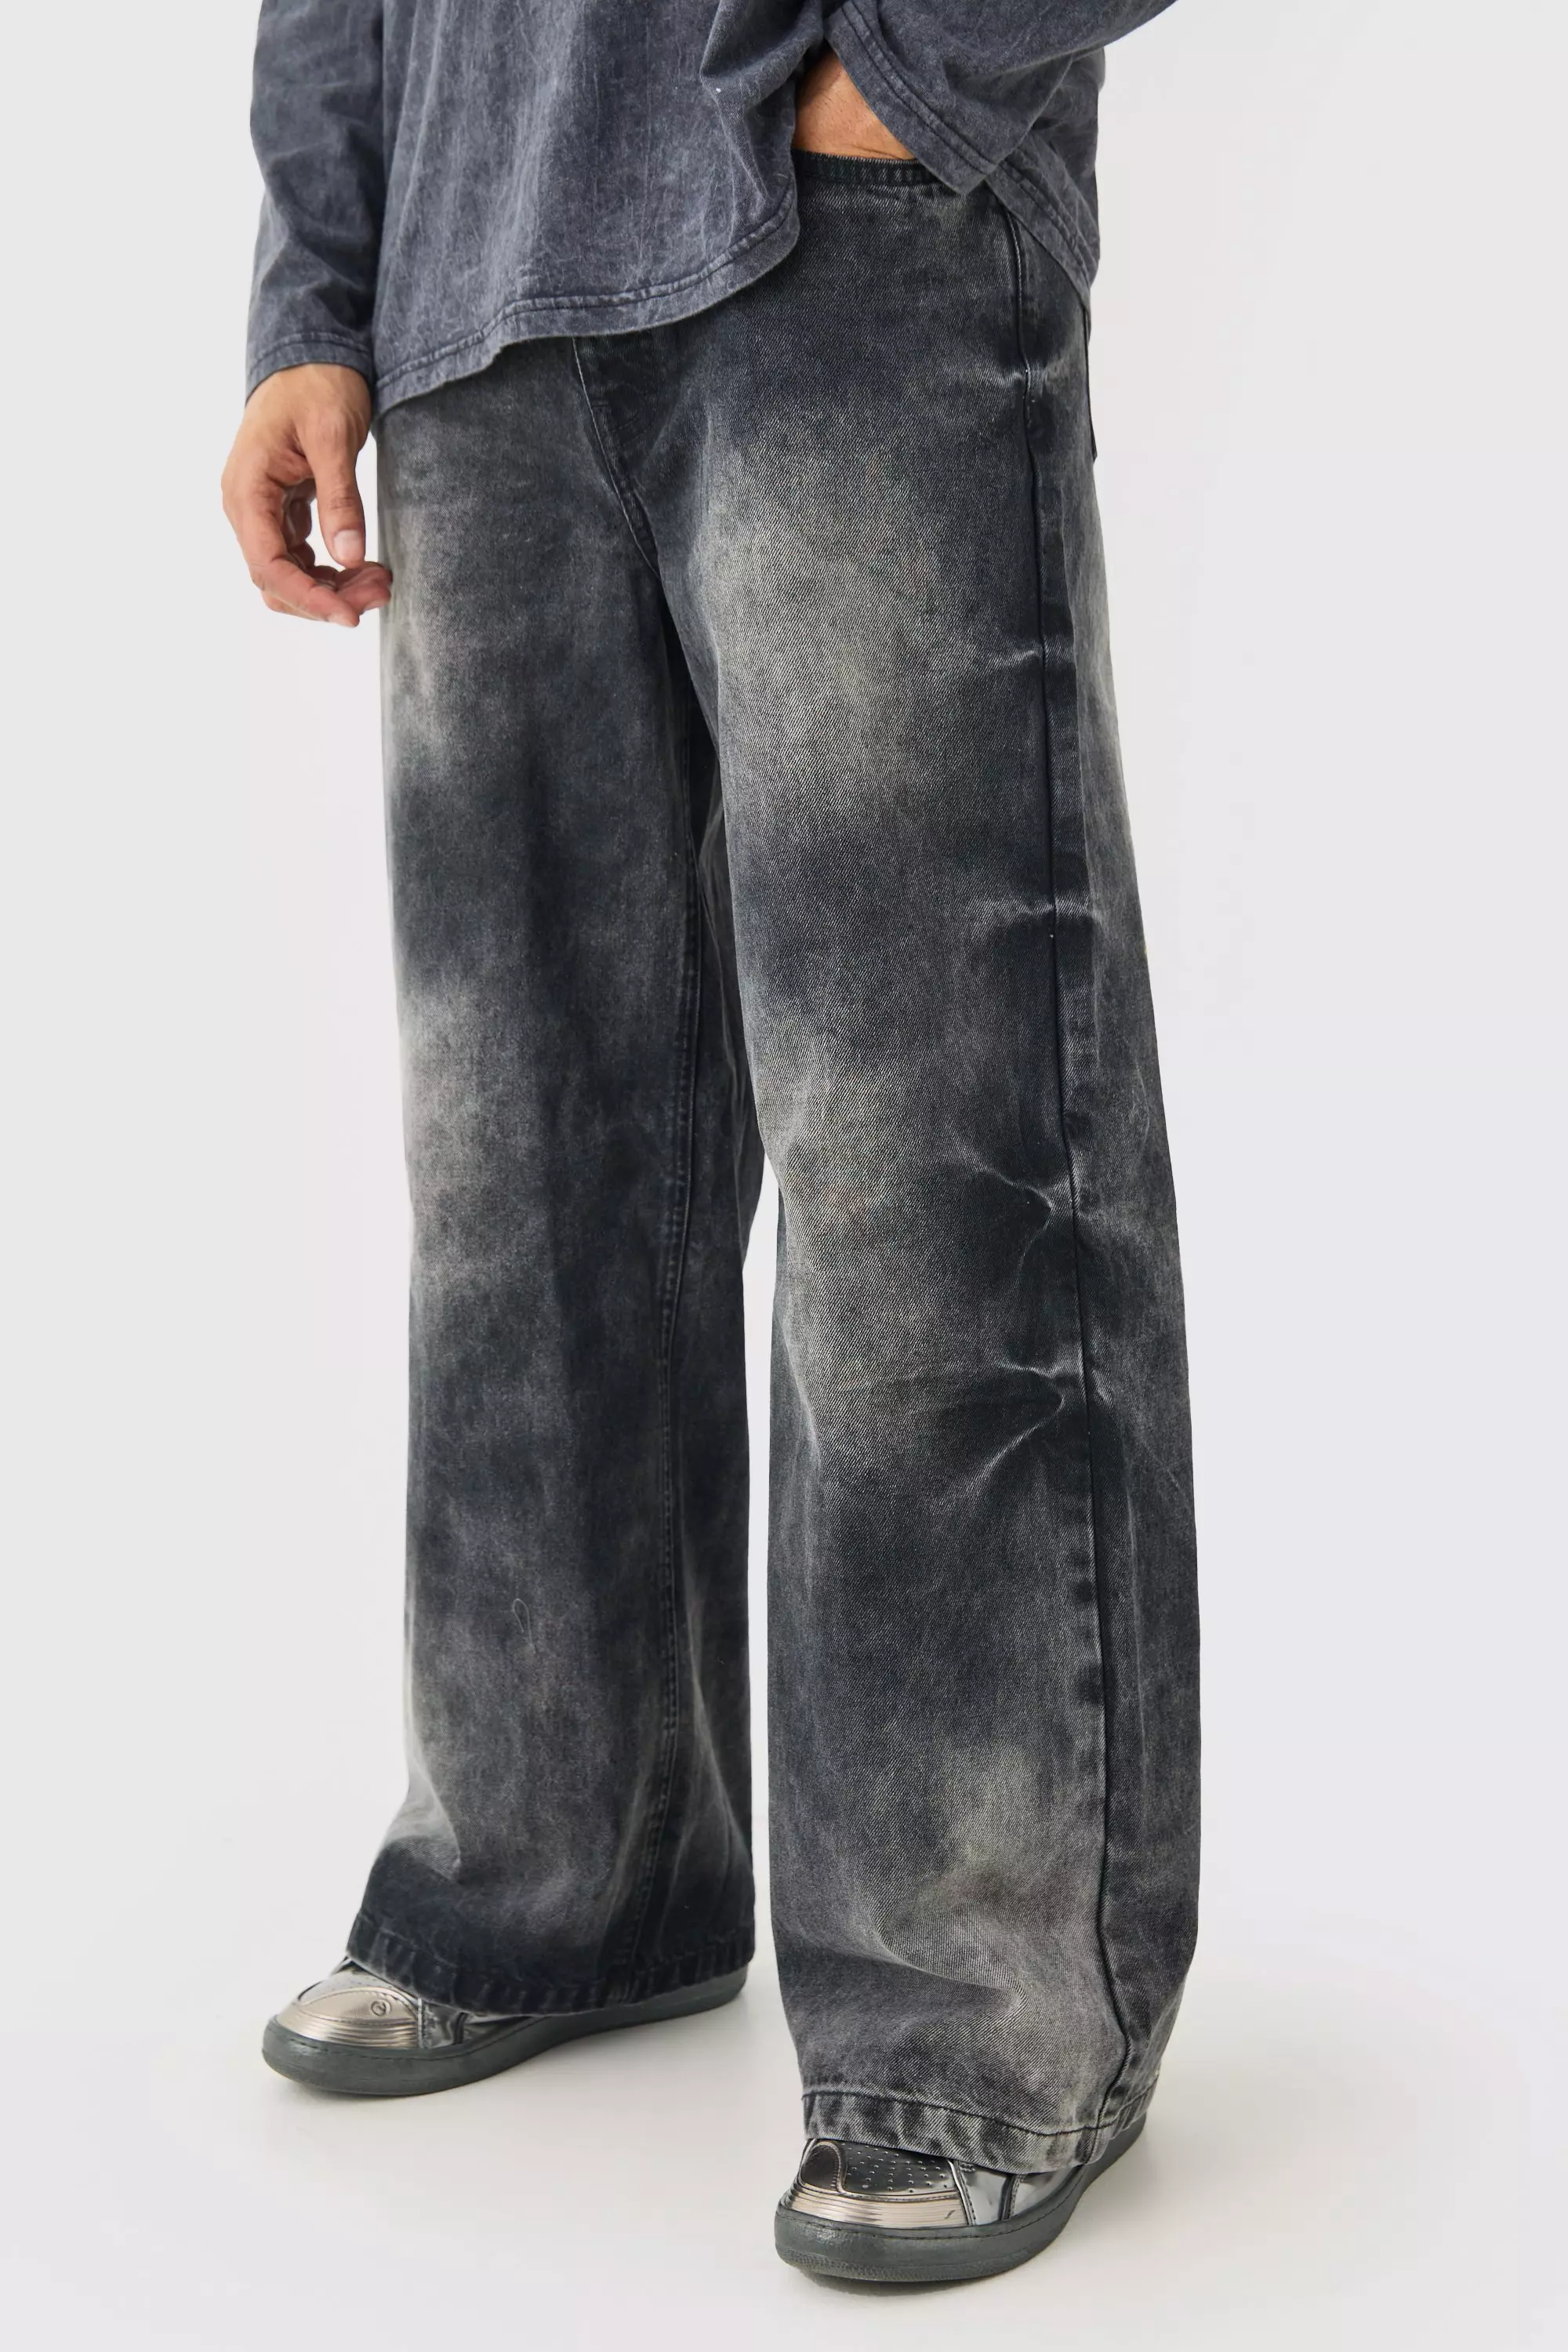 Extreme Baggy Acid Wash Jeans In Washed Black Washed black